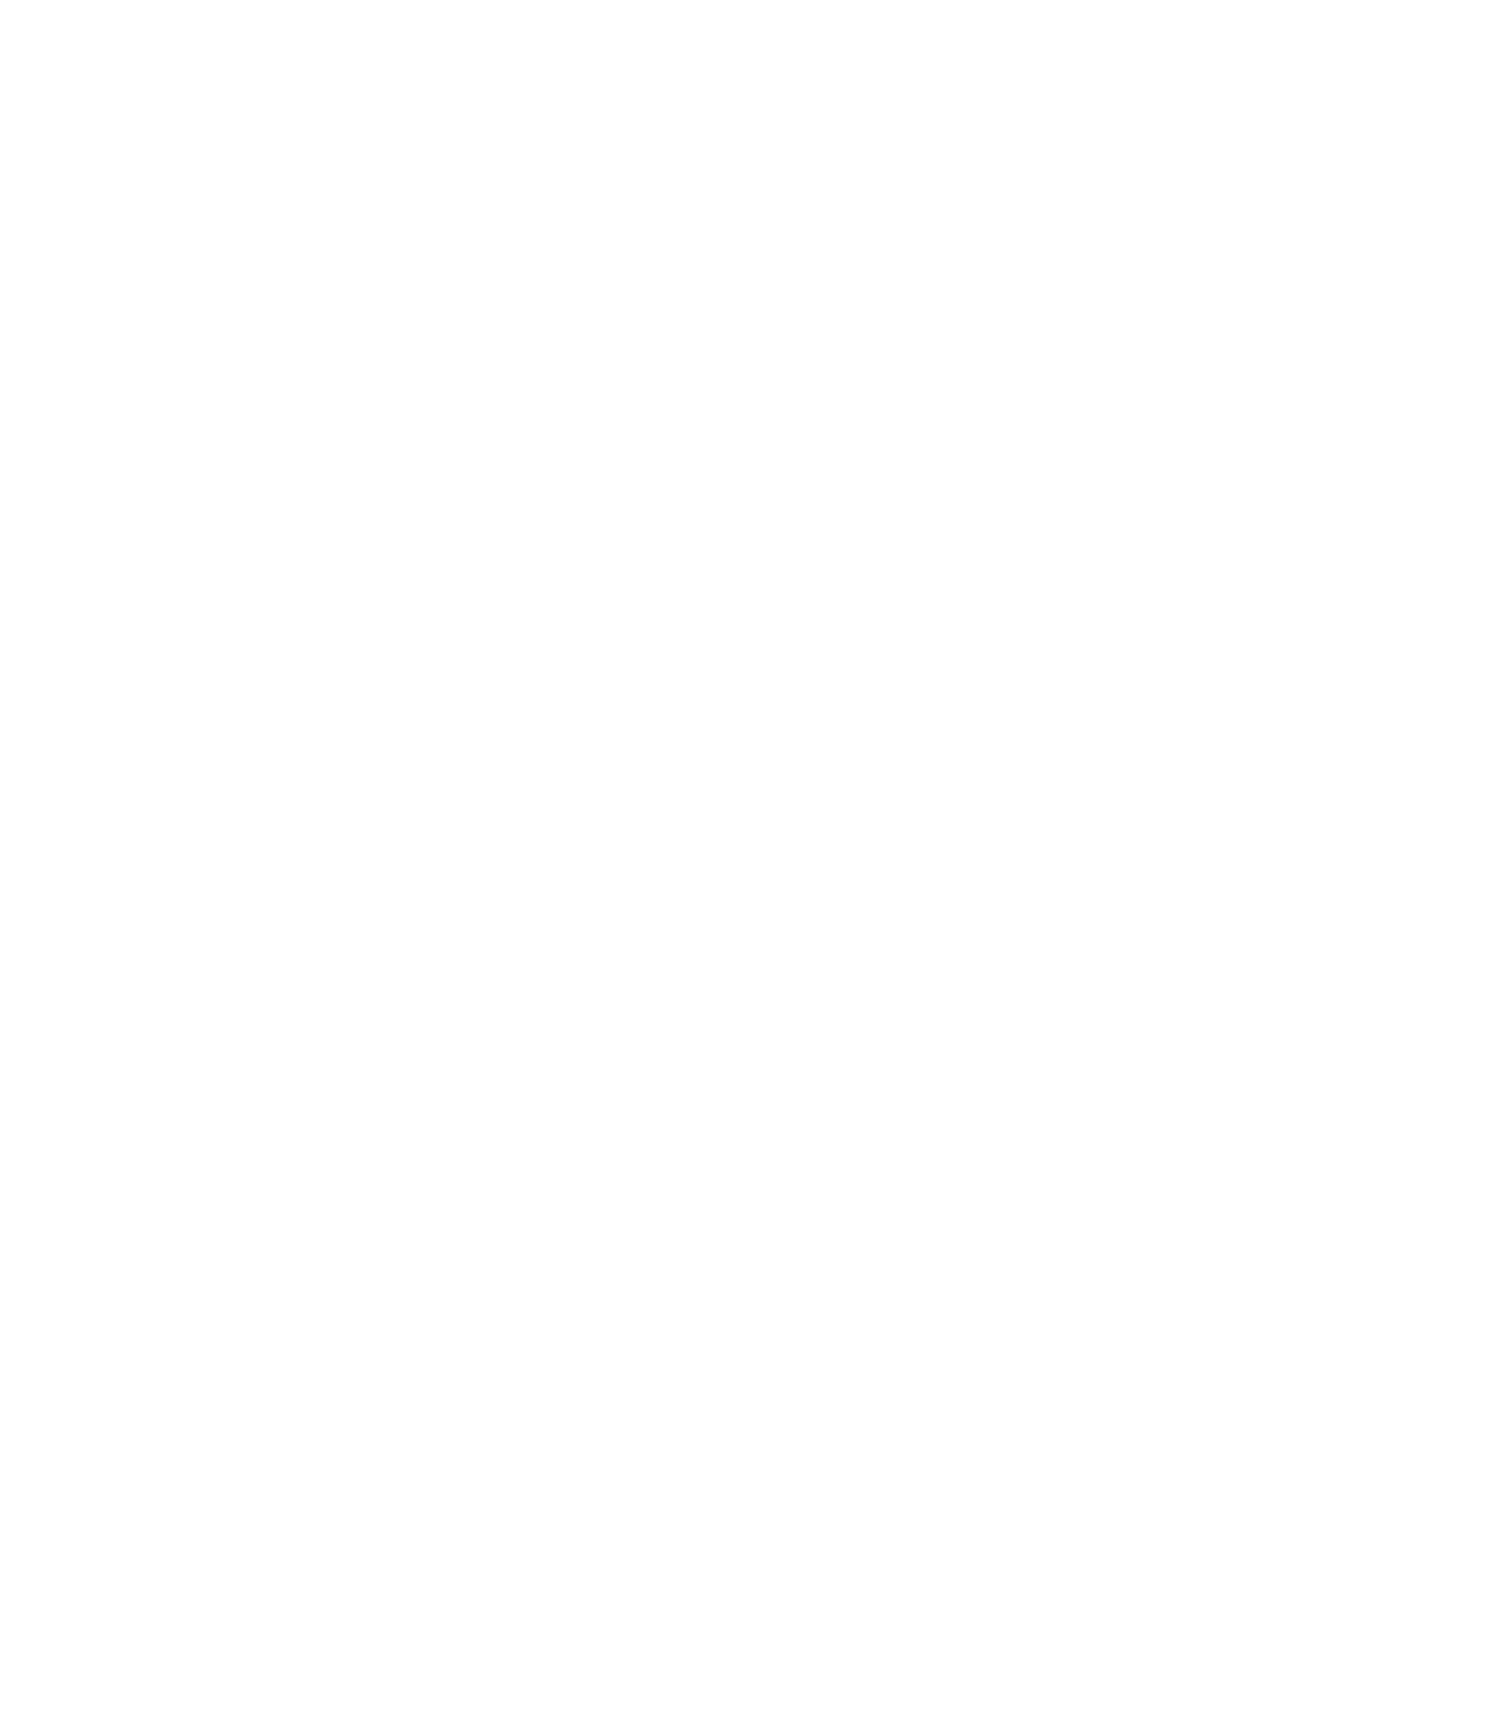 Straddie Sharks Rugby &amp; AllSports Club